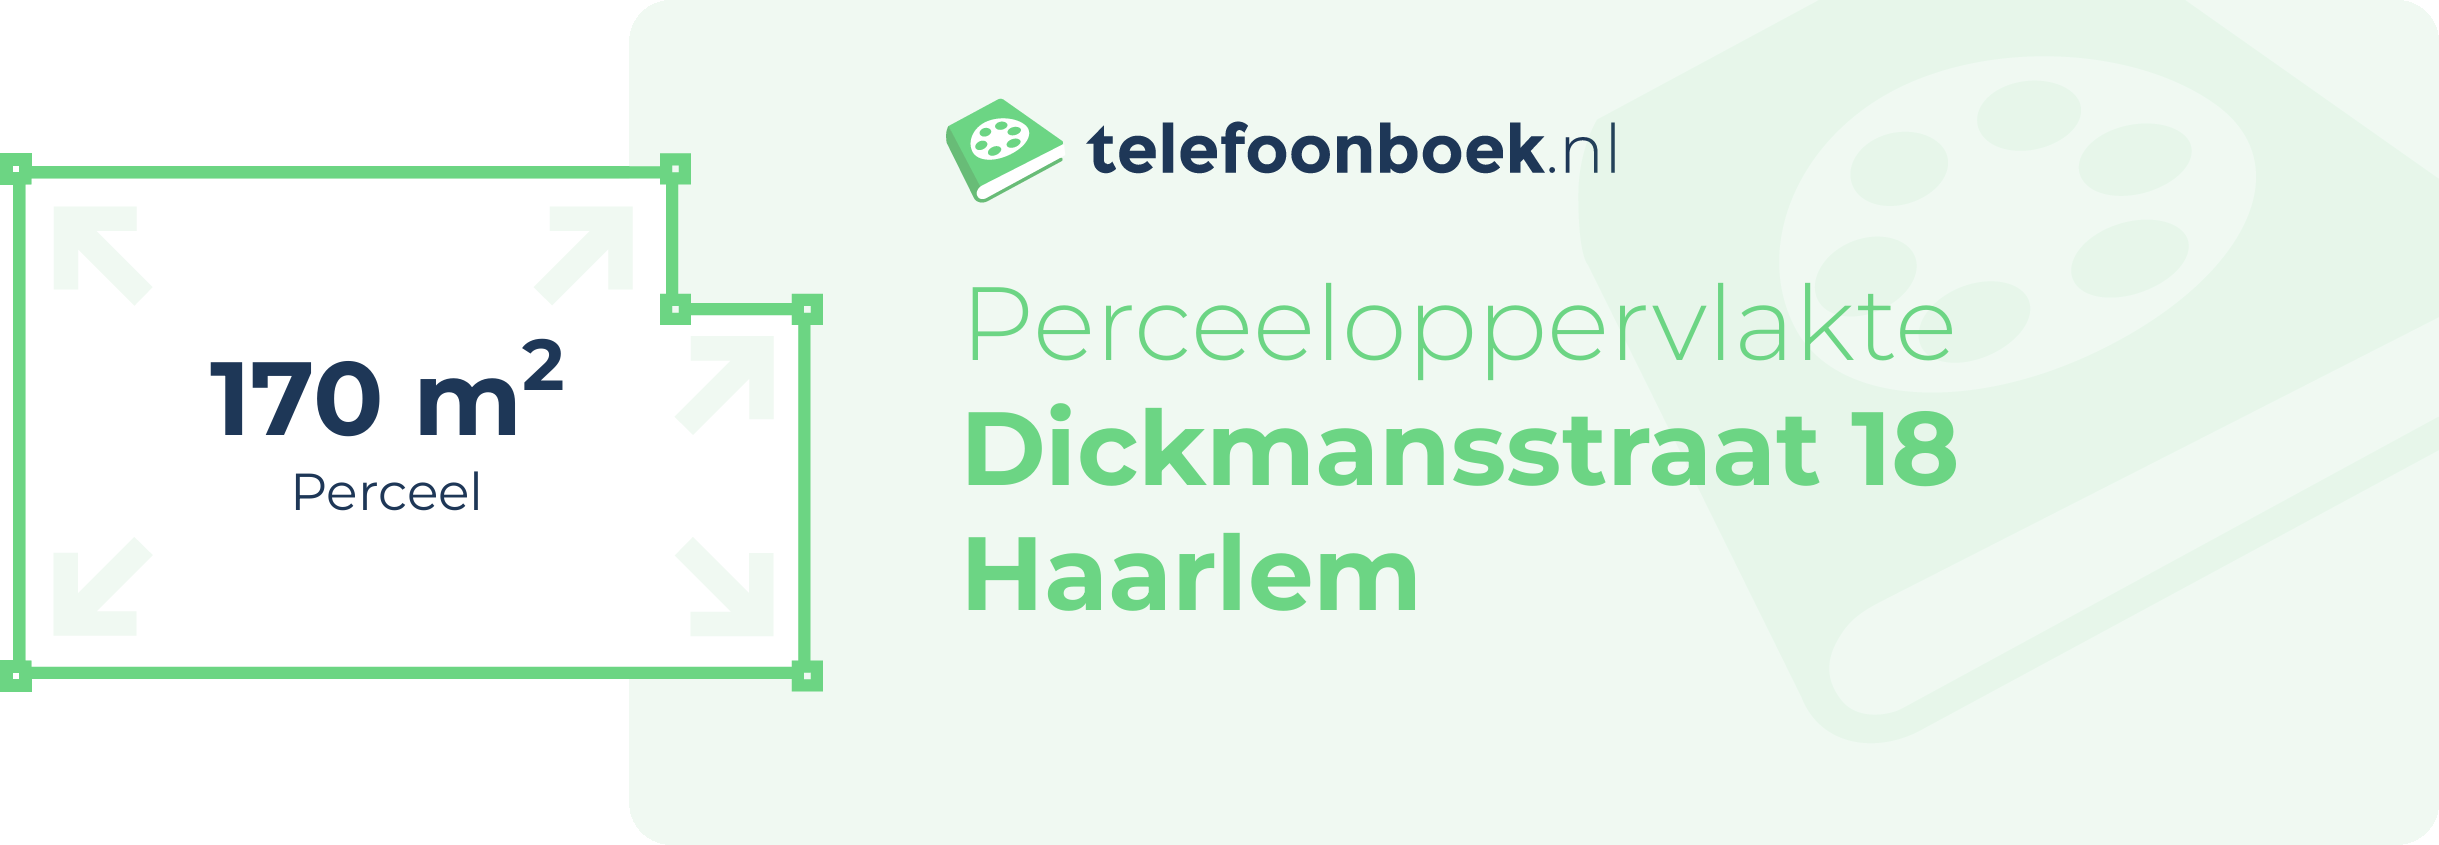 Perceeloppervlakte Dickmansstraat 18 Haarlem